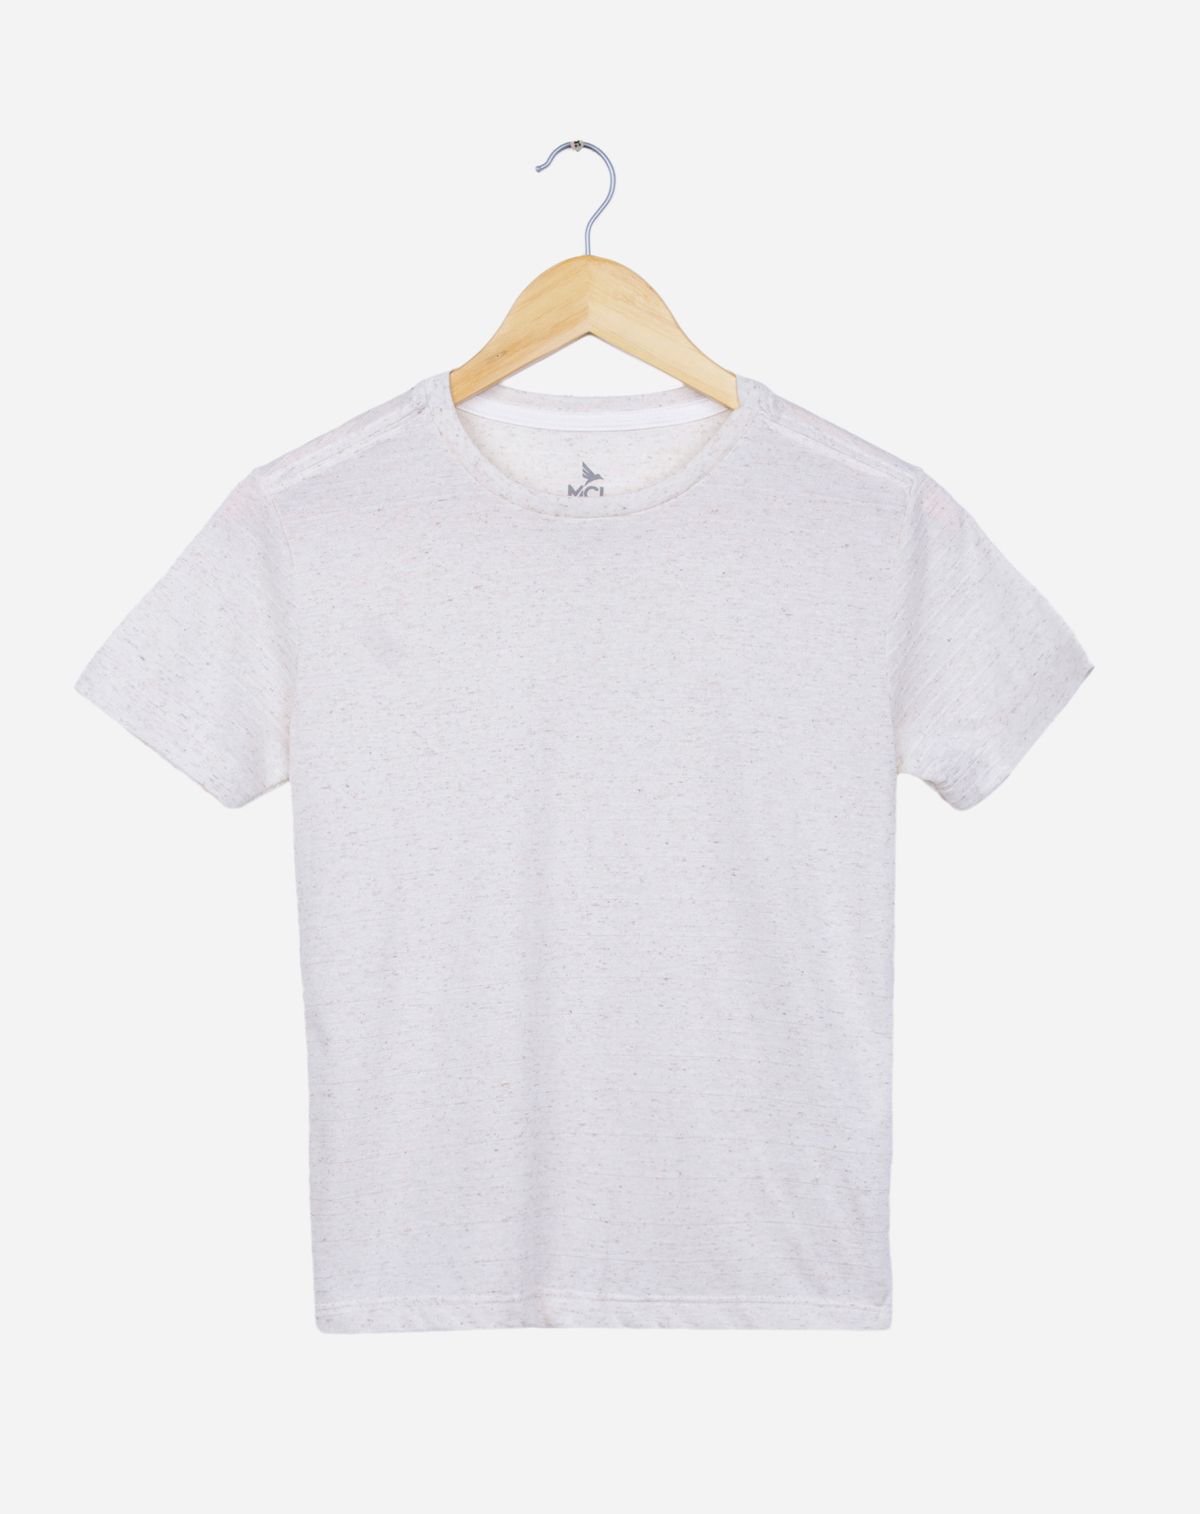 688070002-camiseta-manga-curta-juvenil-menino-listras-relevo-off-white-12-826